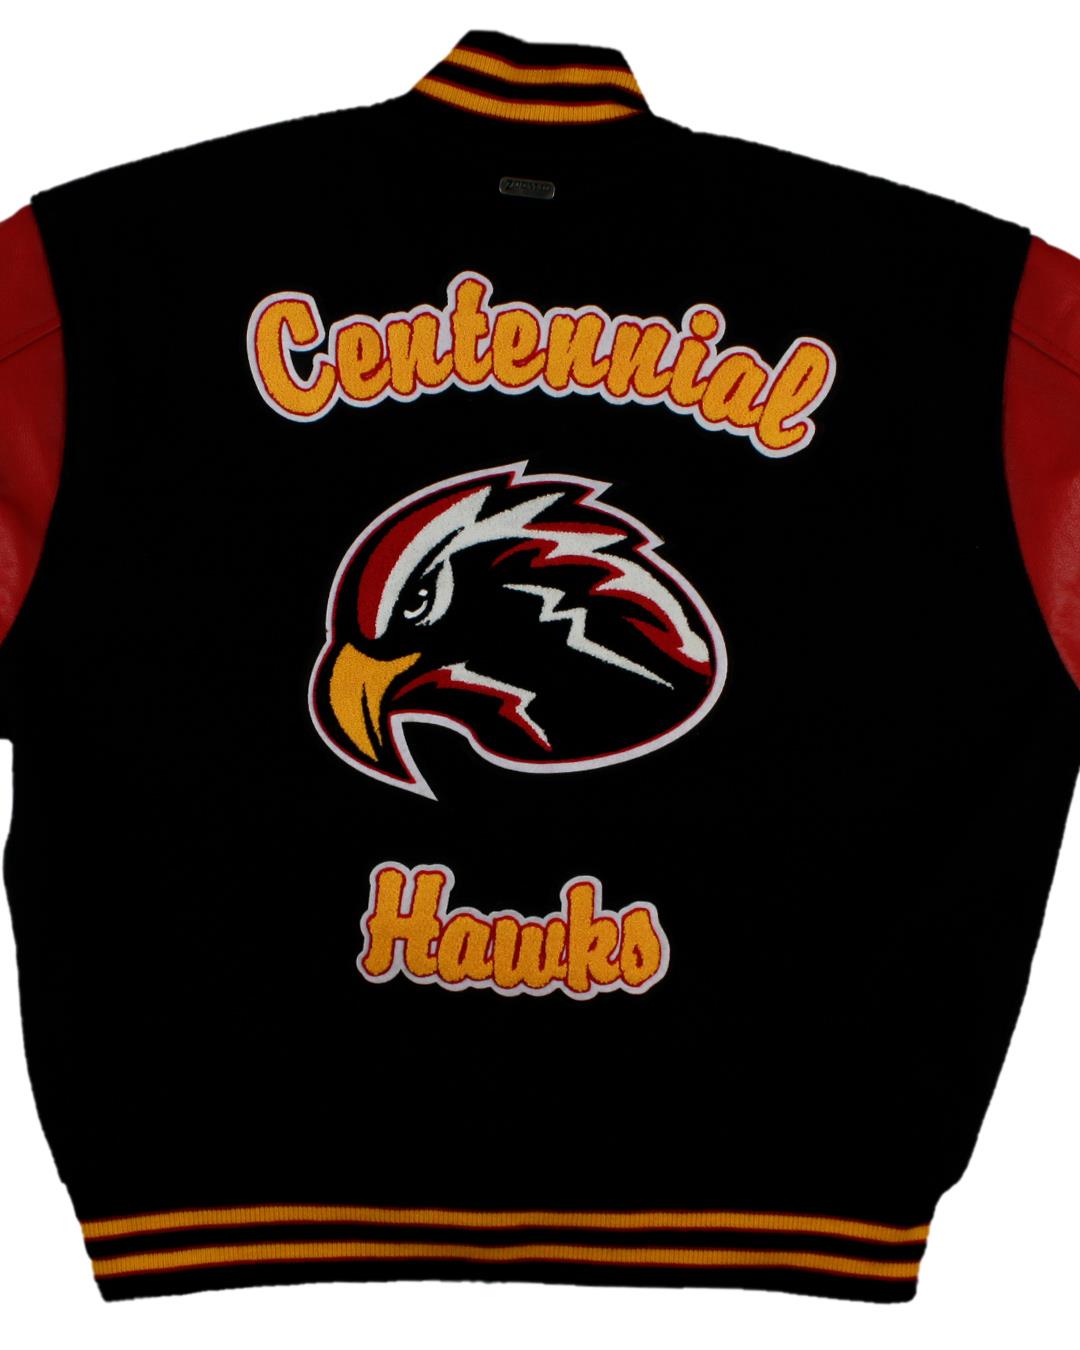 Centennial High School Lettermen Jacket, Las Cruces, NM - Back